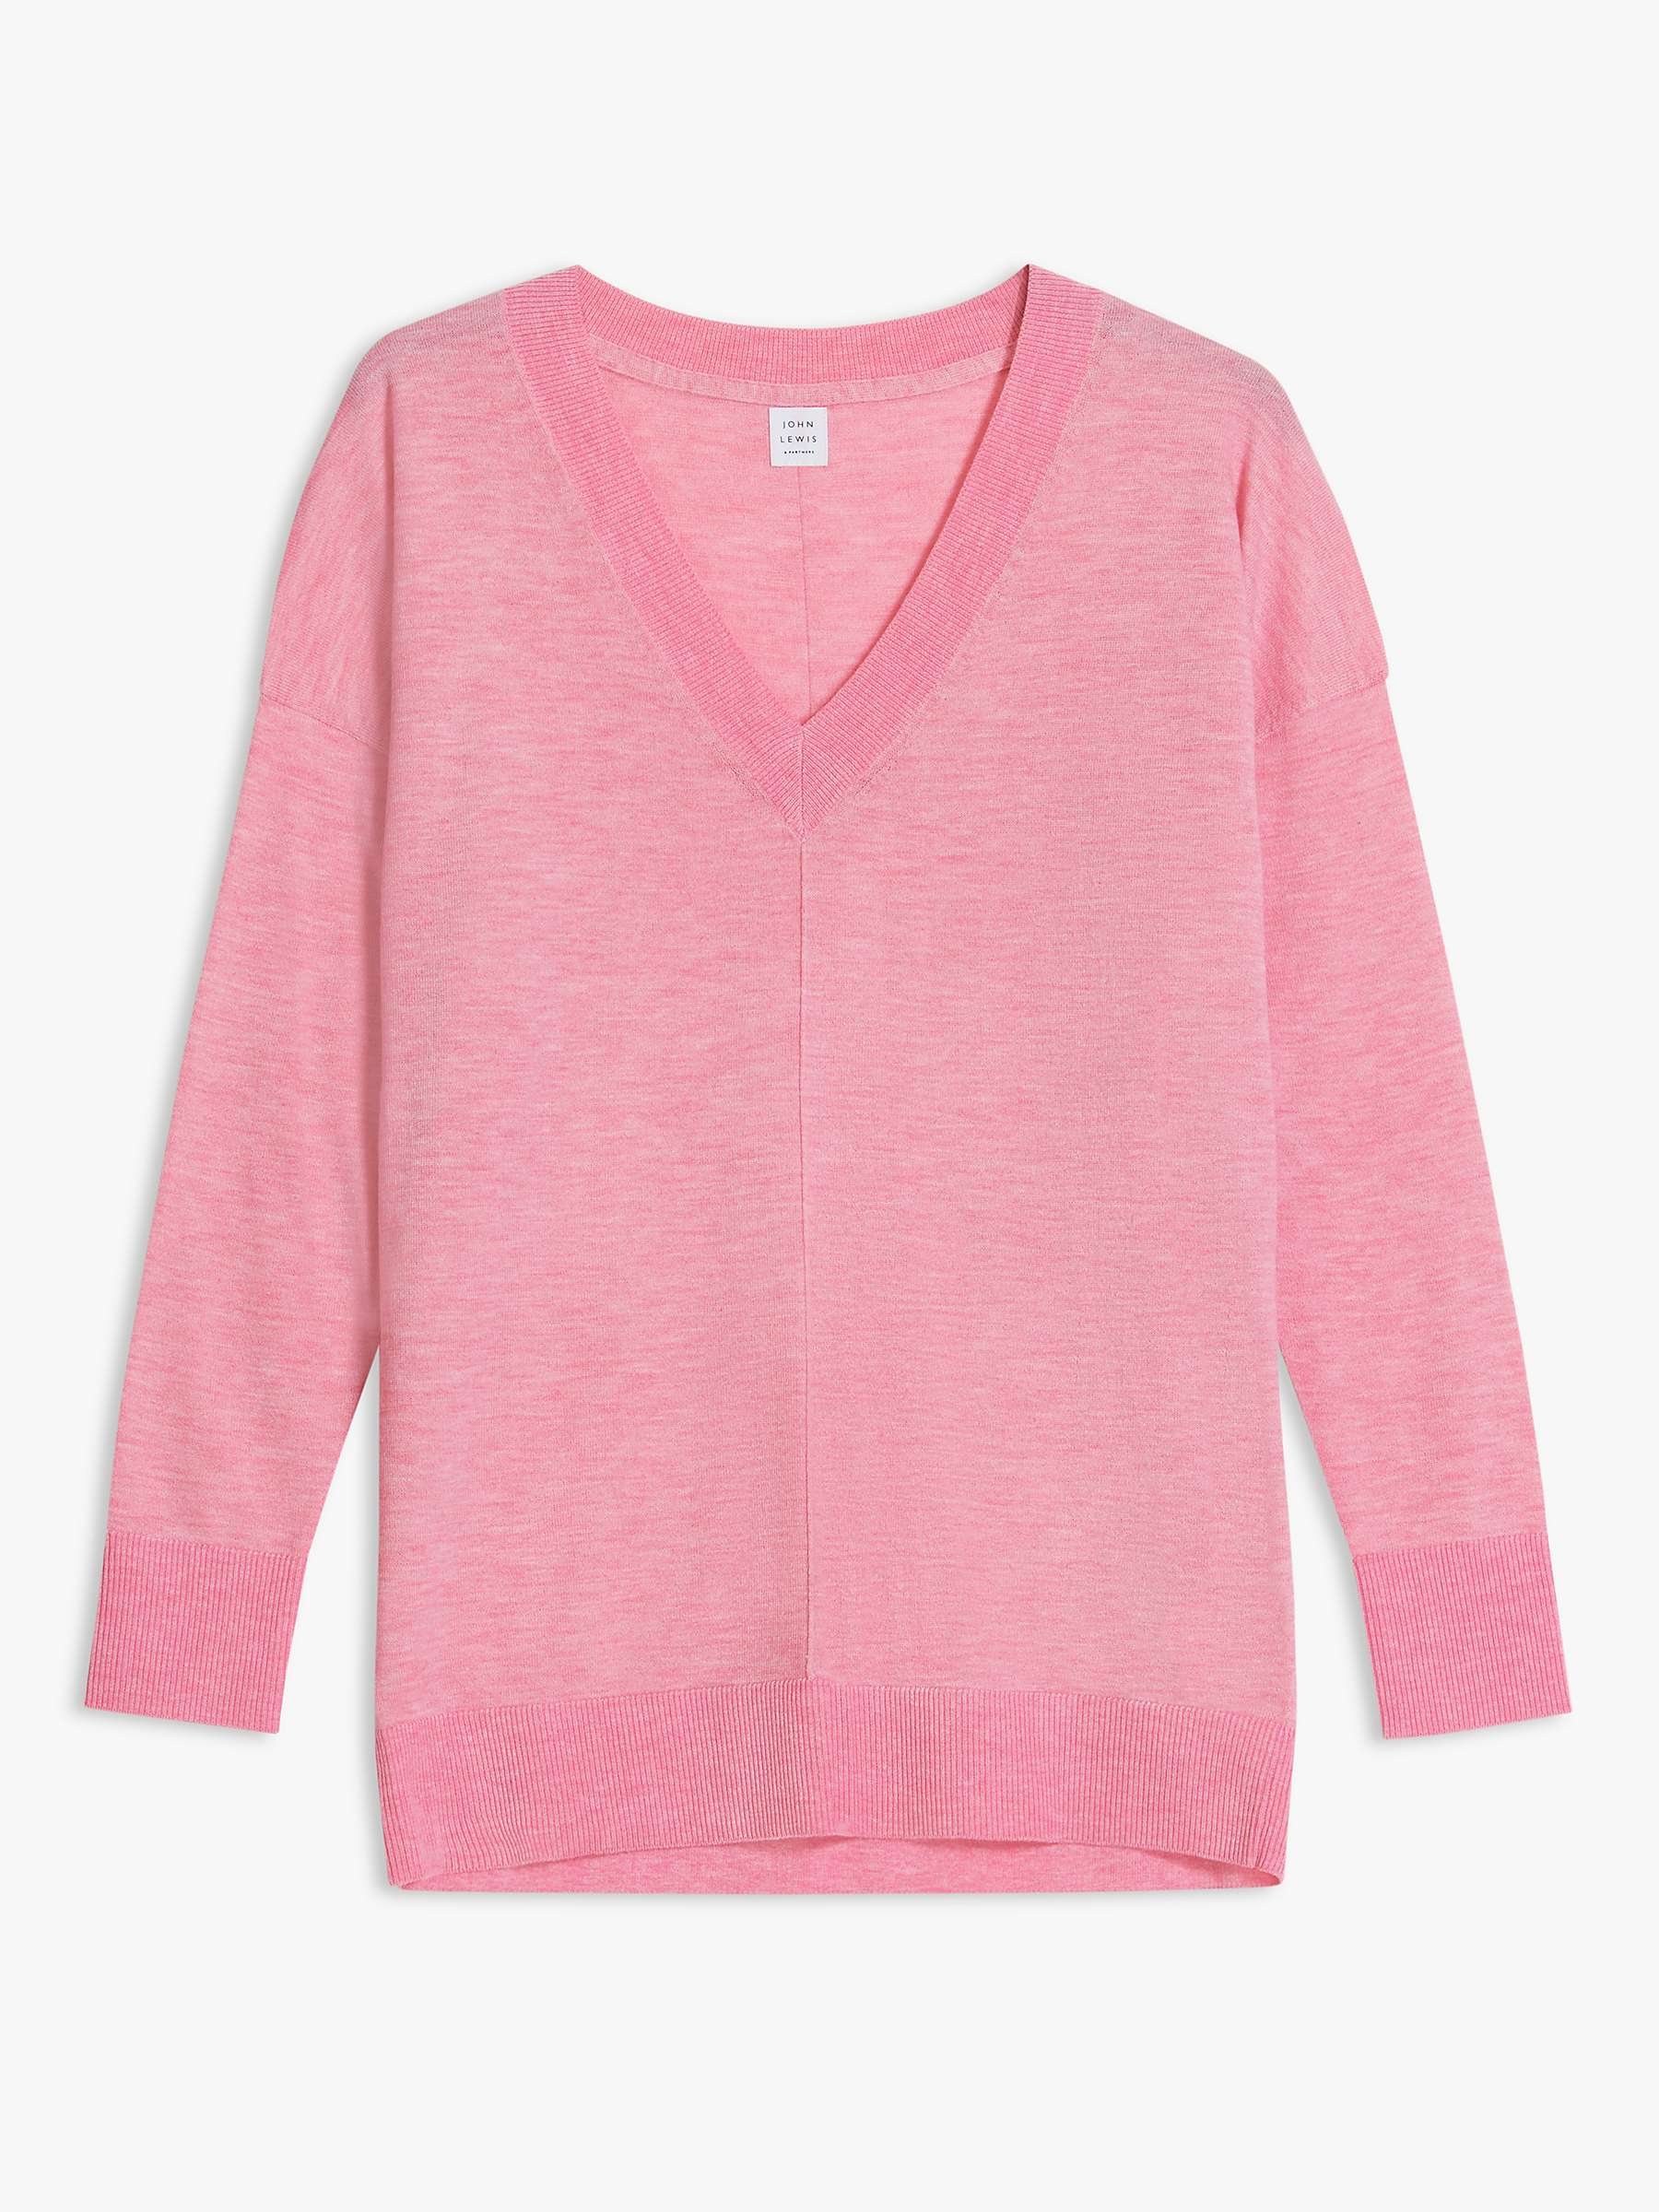 John Lewis & Partners Drop Sleeve V-Neck Sweater, Pink at John Lewis ...